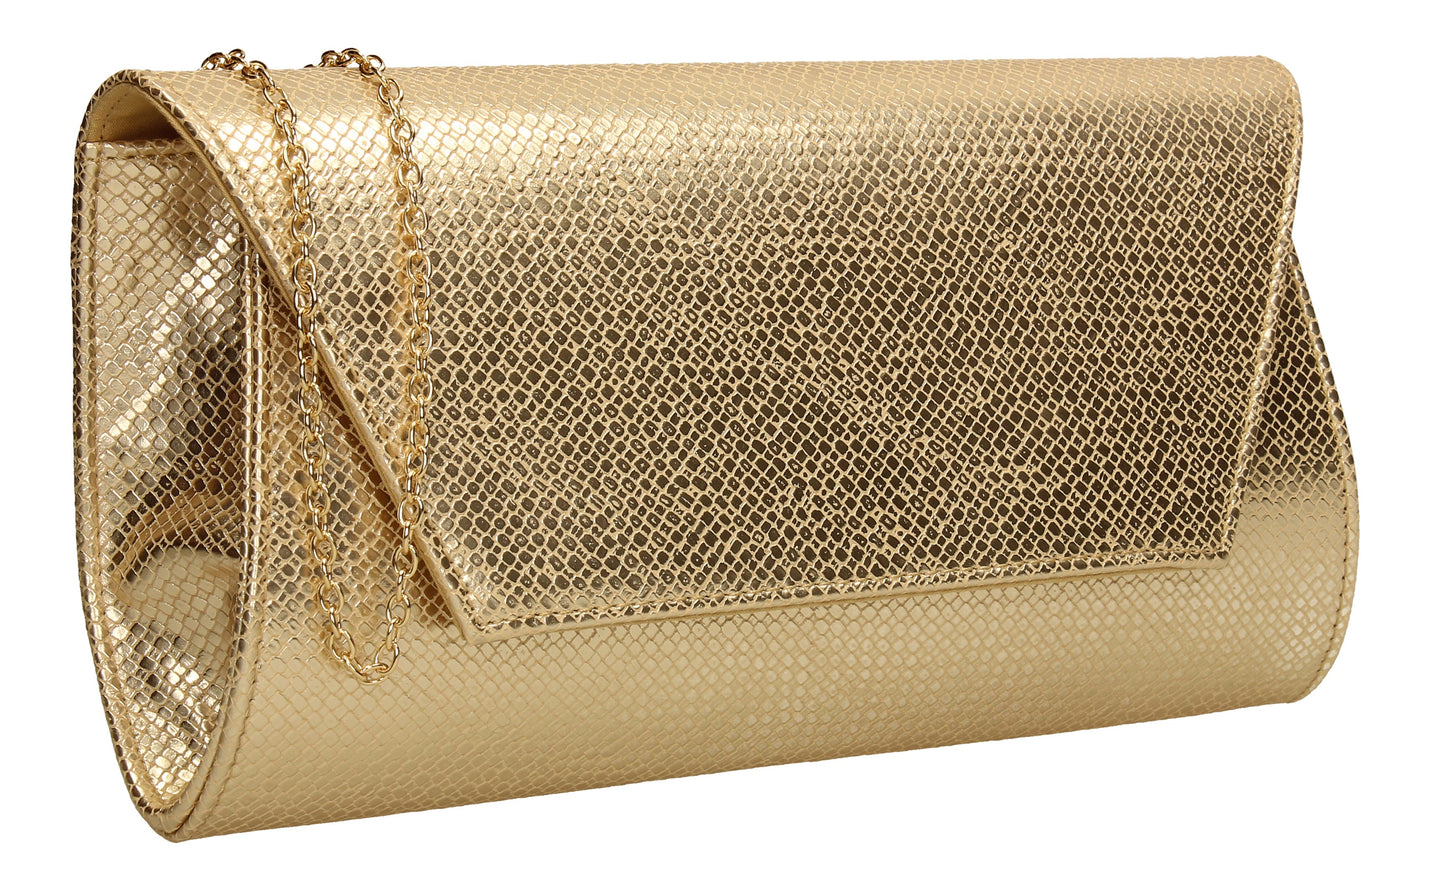 SWANKYSWANS Merci Micro Clutch Bag Gold Cute Cheap Clutch Bag For Weddings School and Work